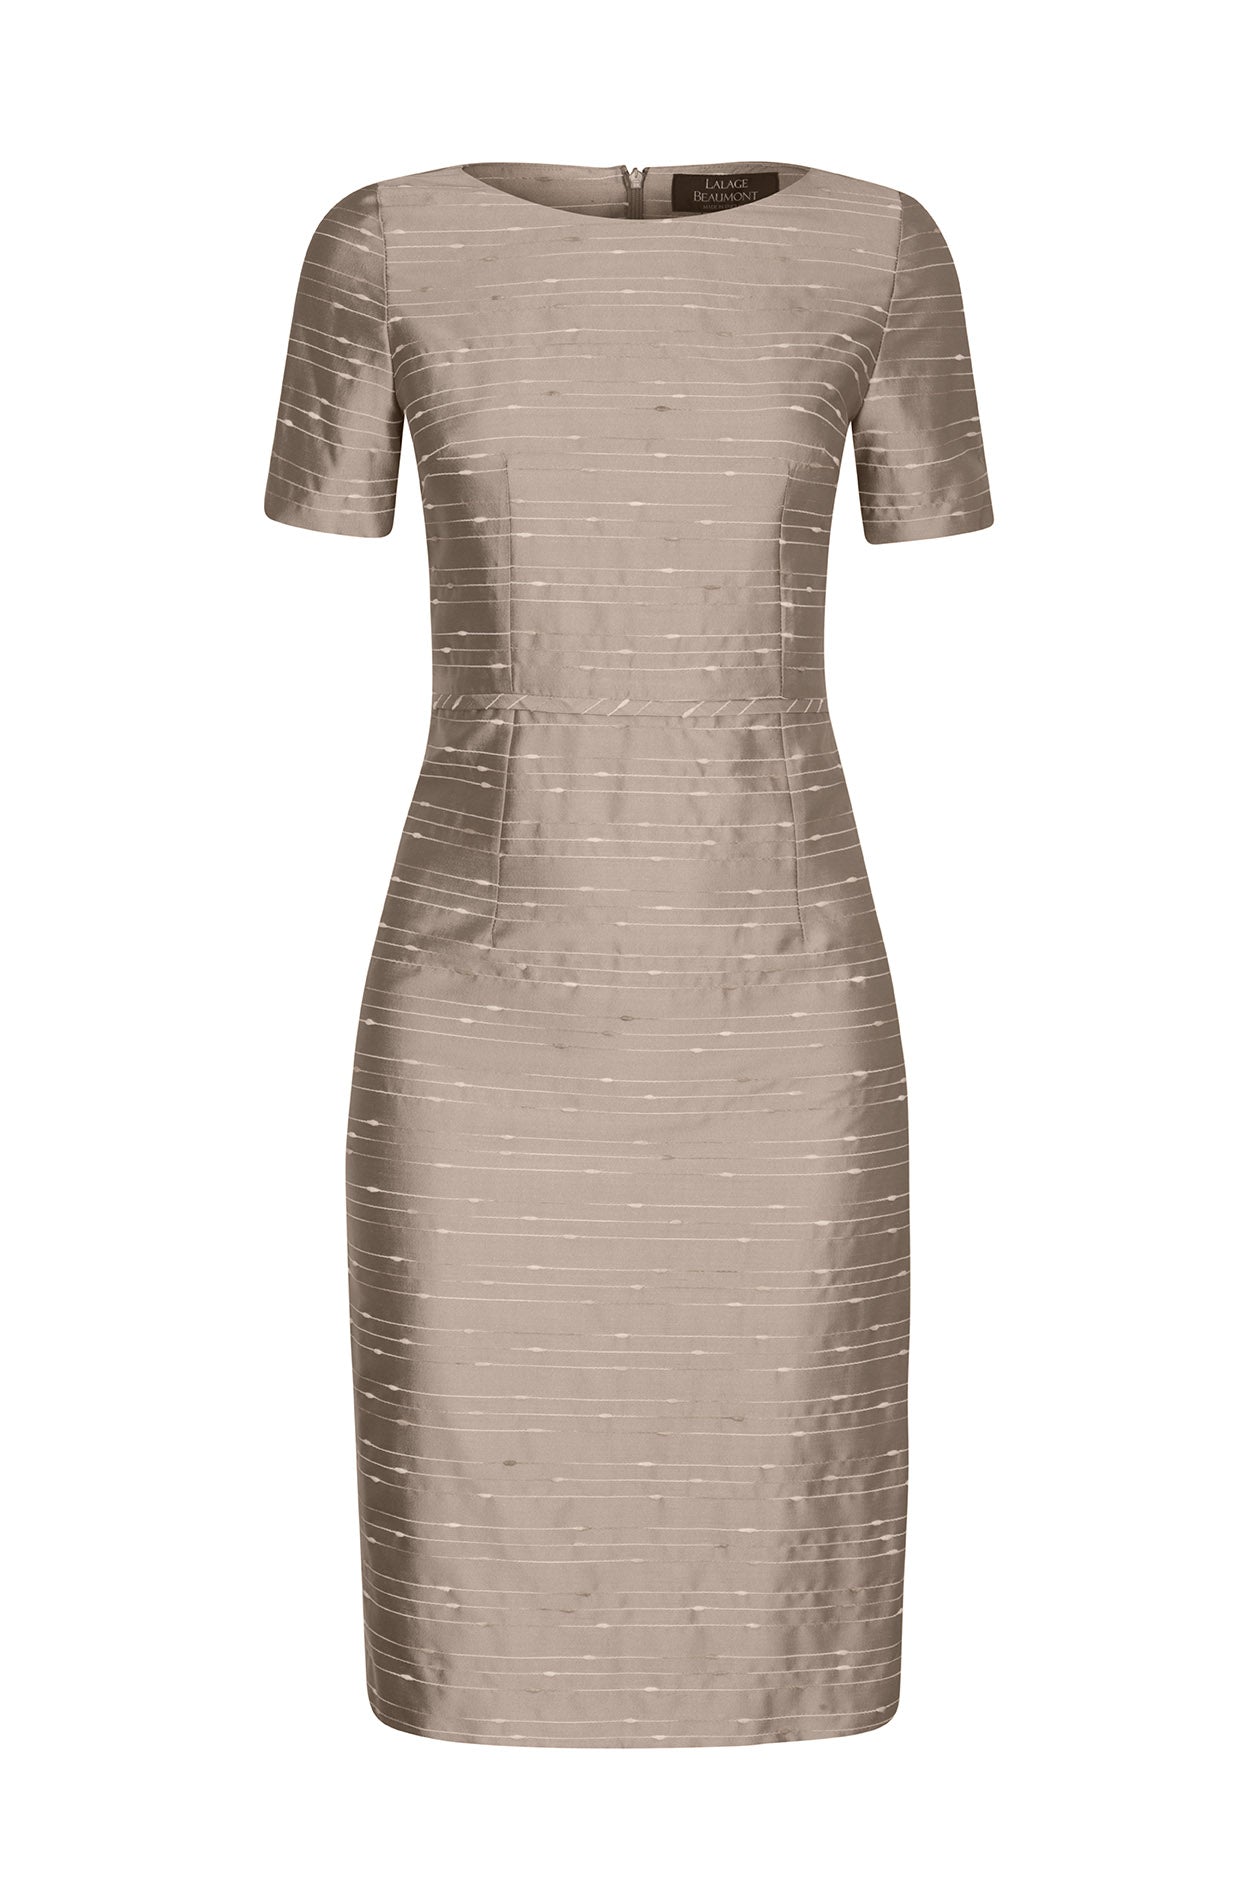 Taupe Dress in Silk Slub Stripe - Angie